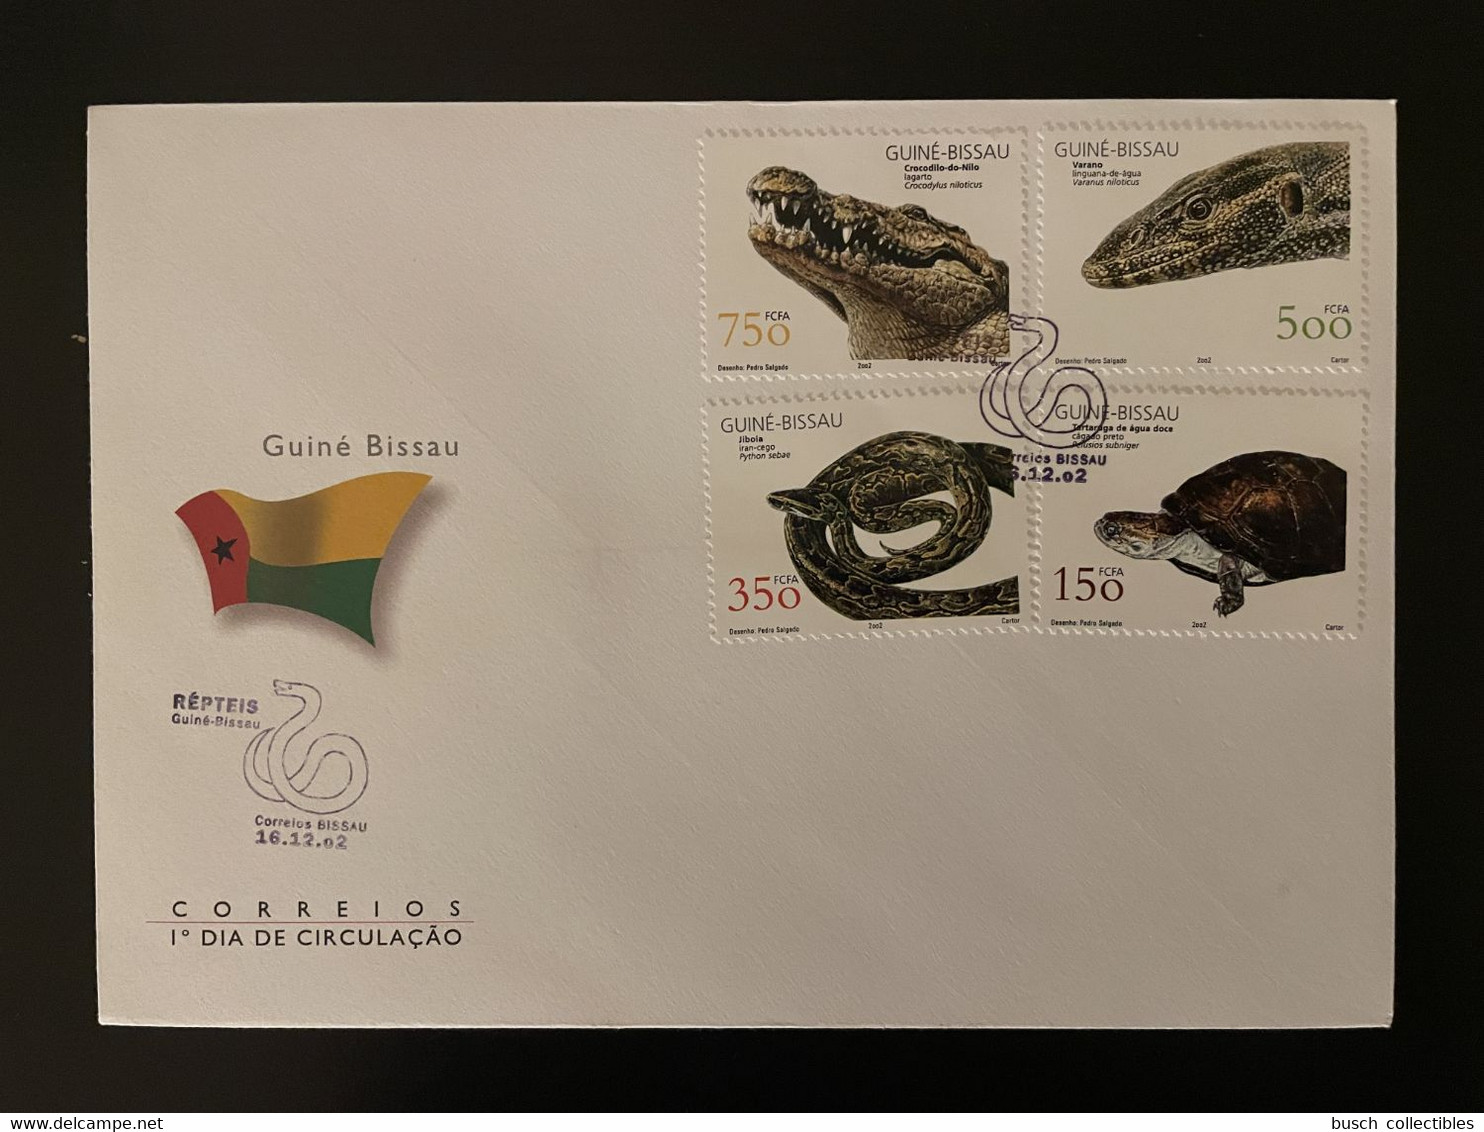 Guiné-Bissau Guinea Guinée Bissau 2002 Mi. 2029 - 2032 FDC Reptiles Reptilien Schildkröte Schlange Snake Serpent Tortue - Serpenti